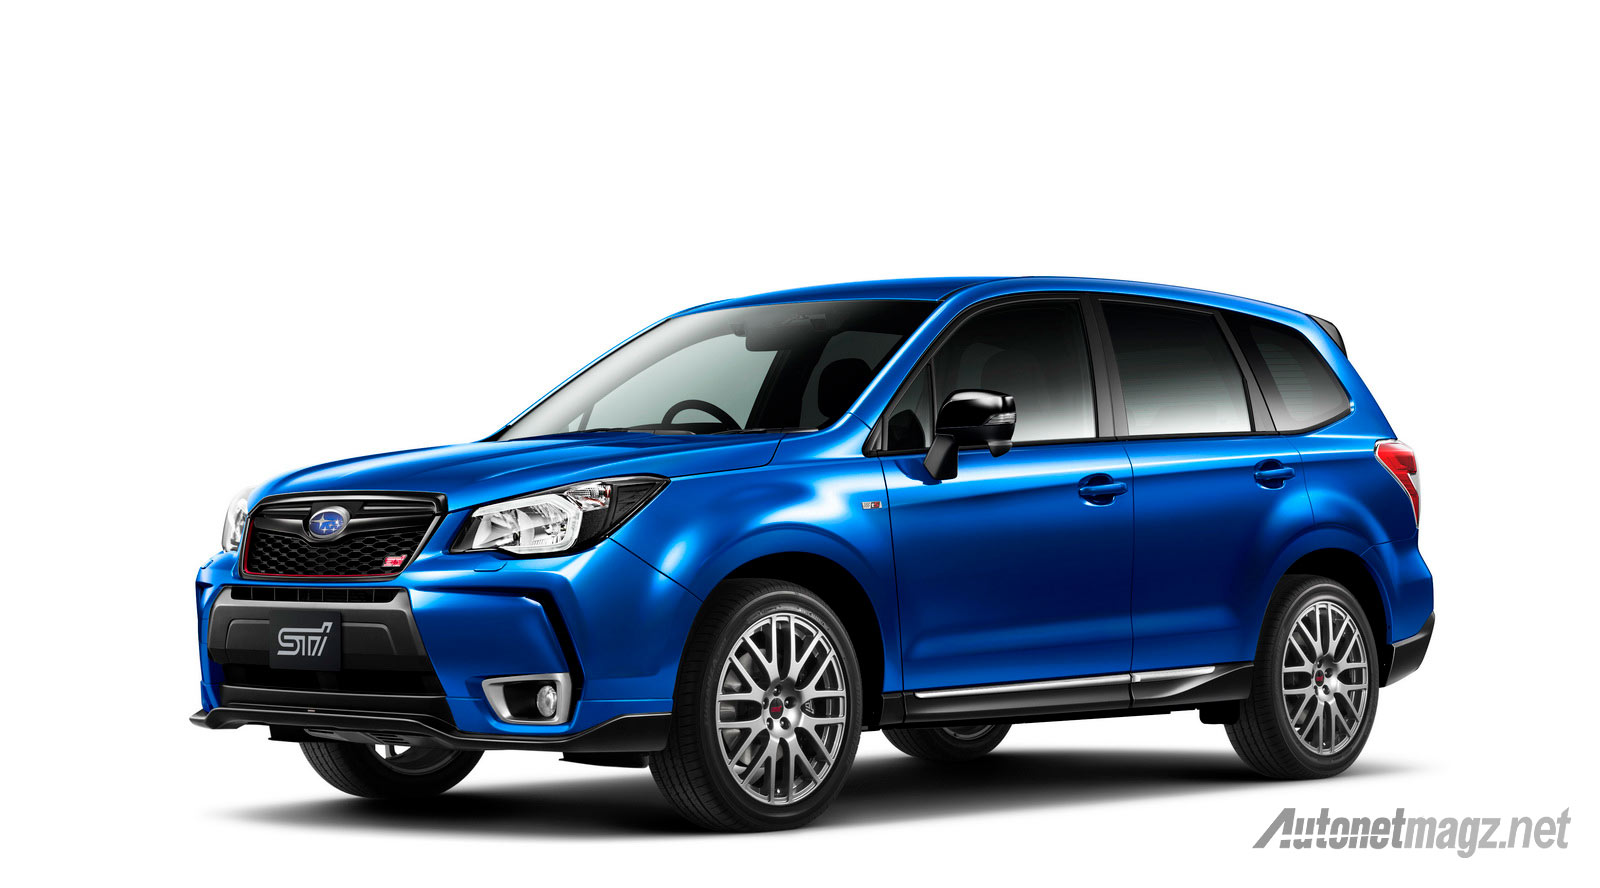 Berita, Subaru-Forester-STI-biru: Subaru Forester STI Resmi Dirilis, Terbatas Hanya 300 Unit!